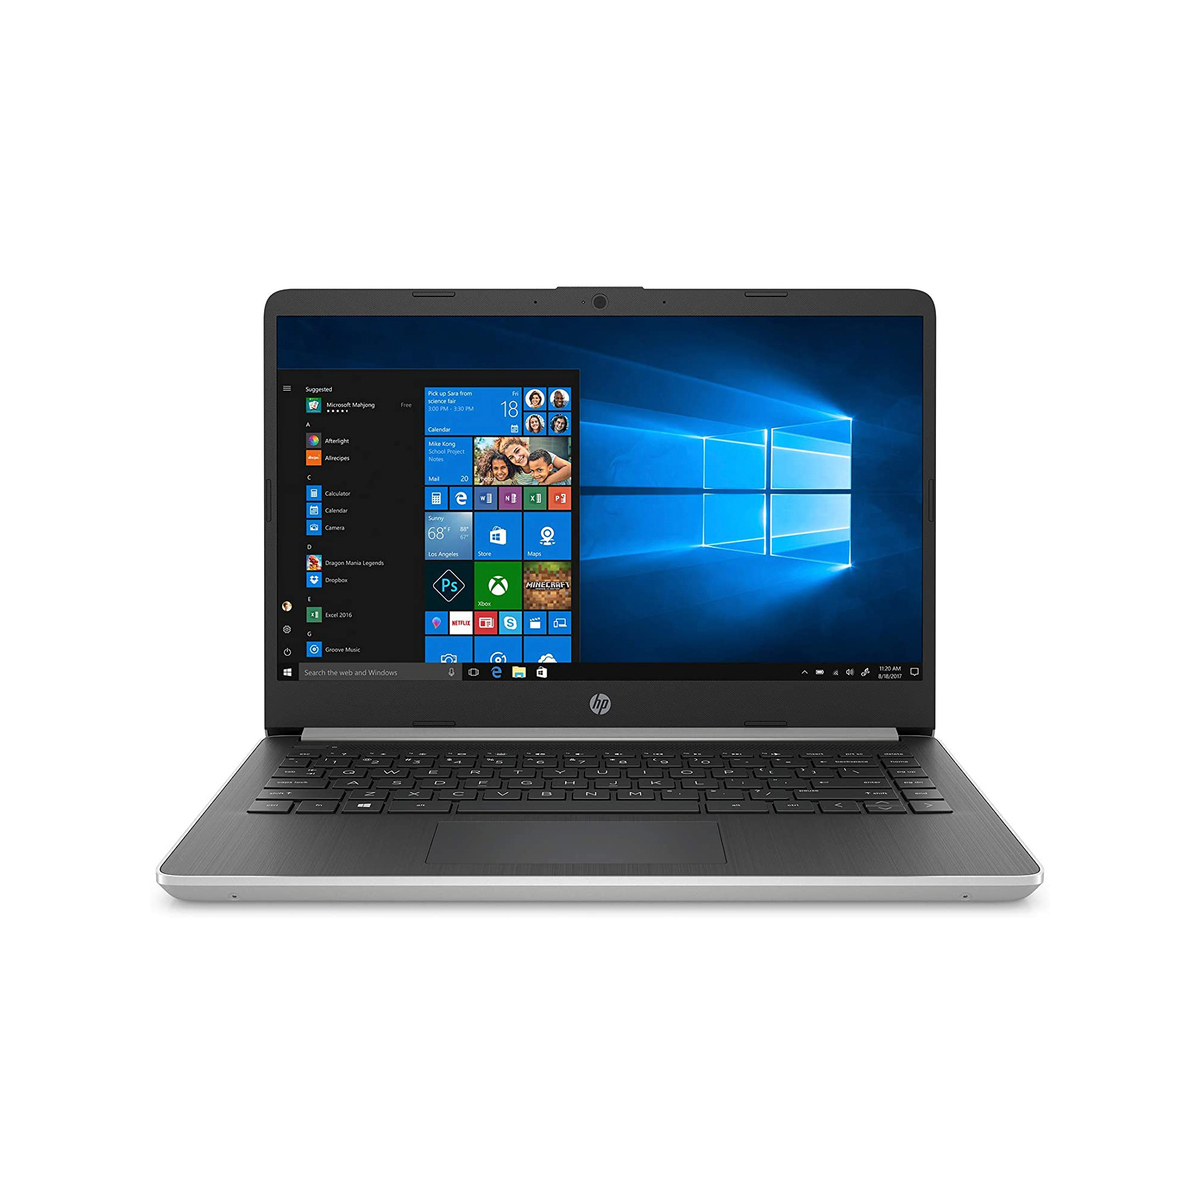 HP Notebook 14-dq1037wm,Intel Core i3,4GB RAM,128GB SSD,Intel UHD Graphics,14" HD LED,Windows 10